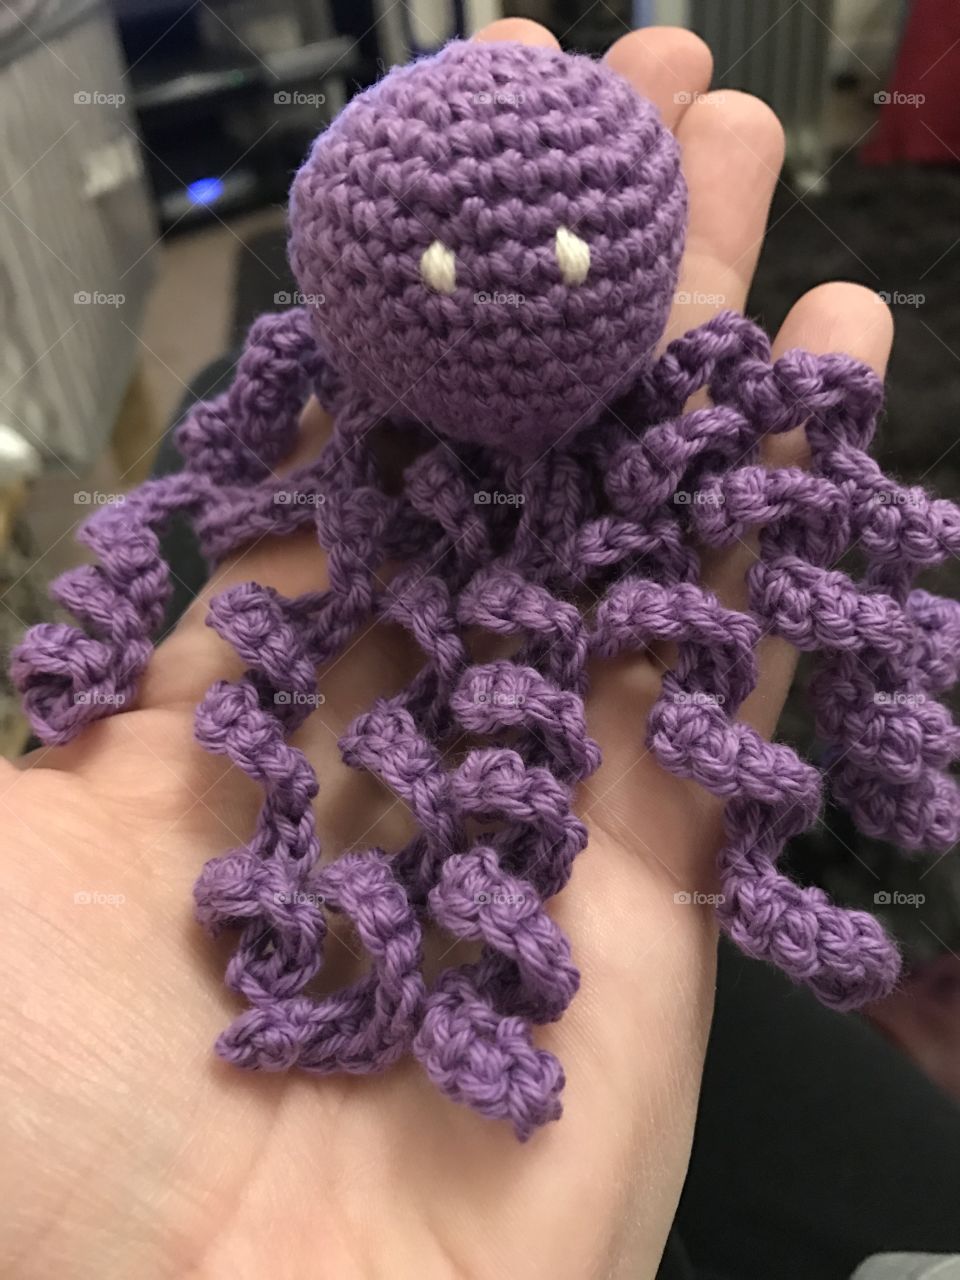 Yarn octopus crochet project craft